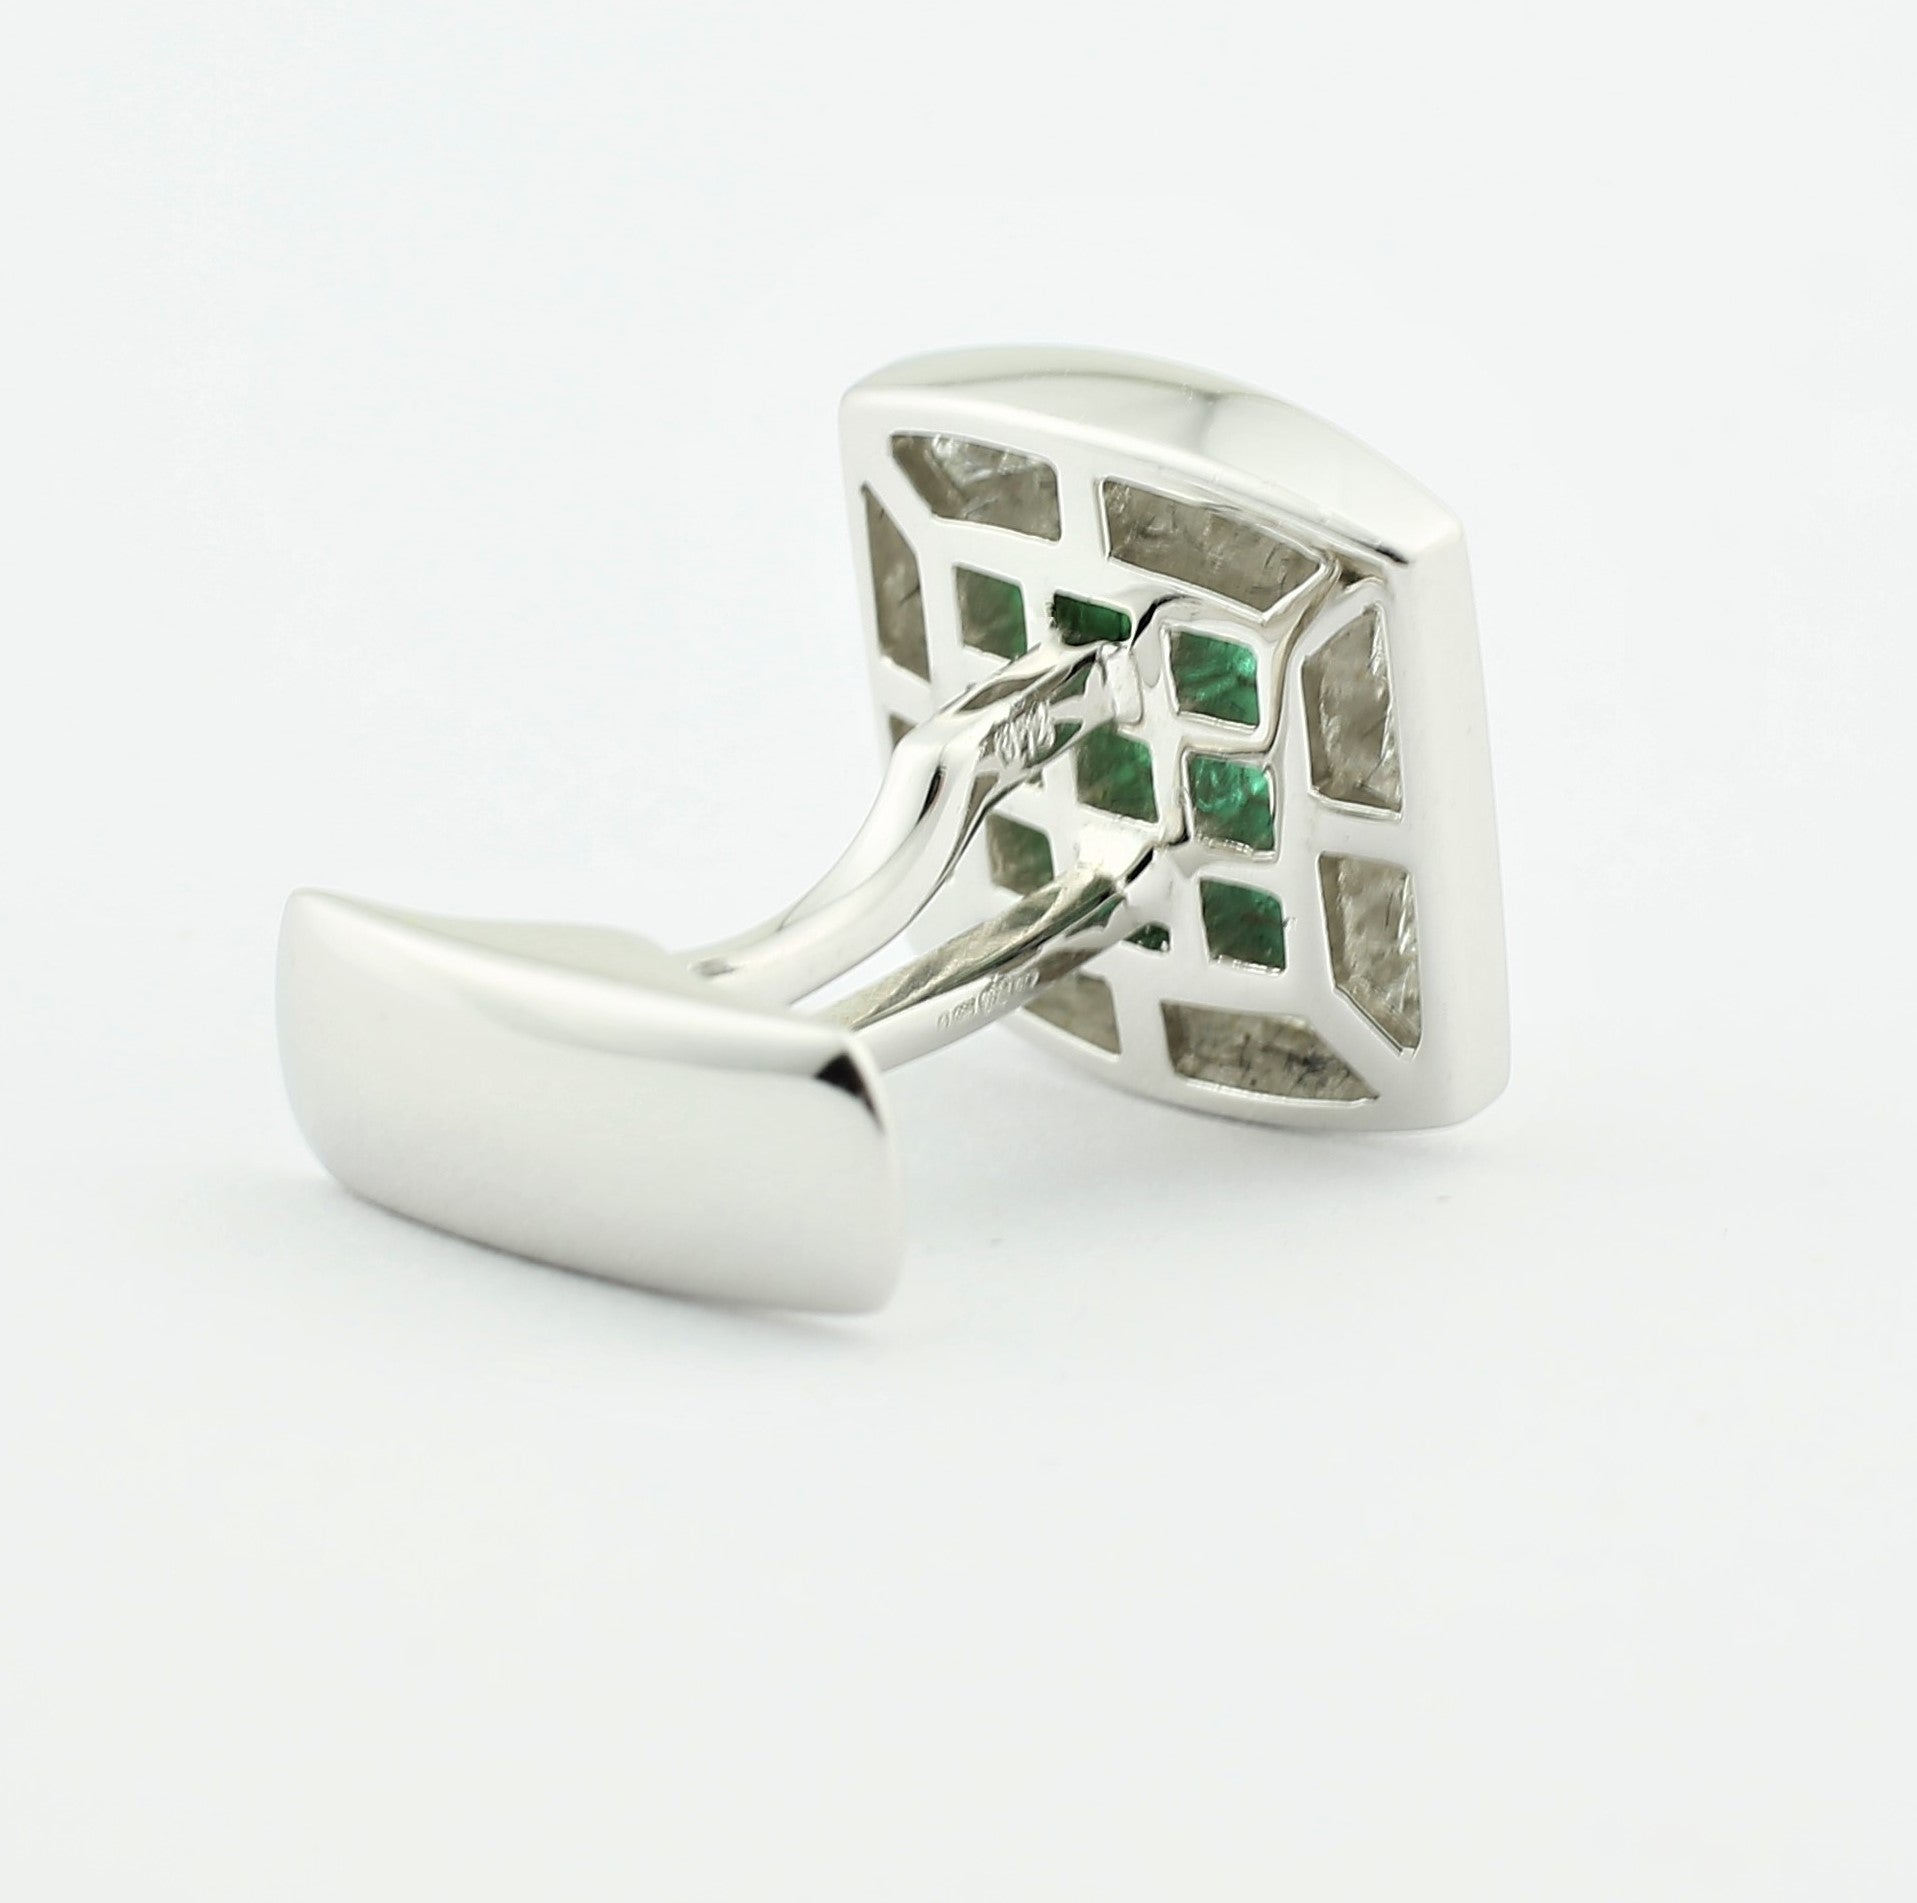 emerald set square 18ct white gold cufflinks - rear